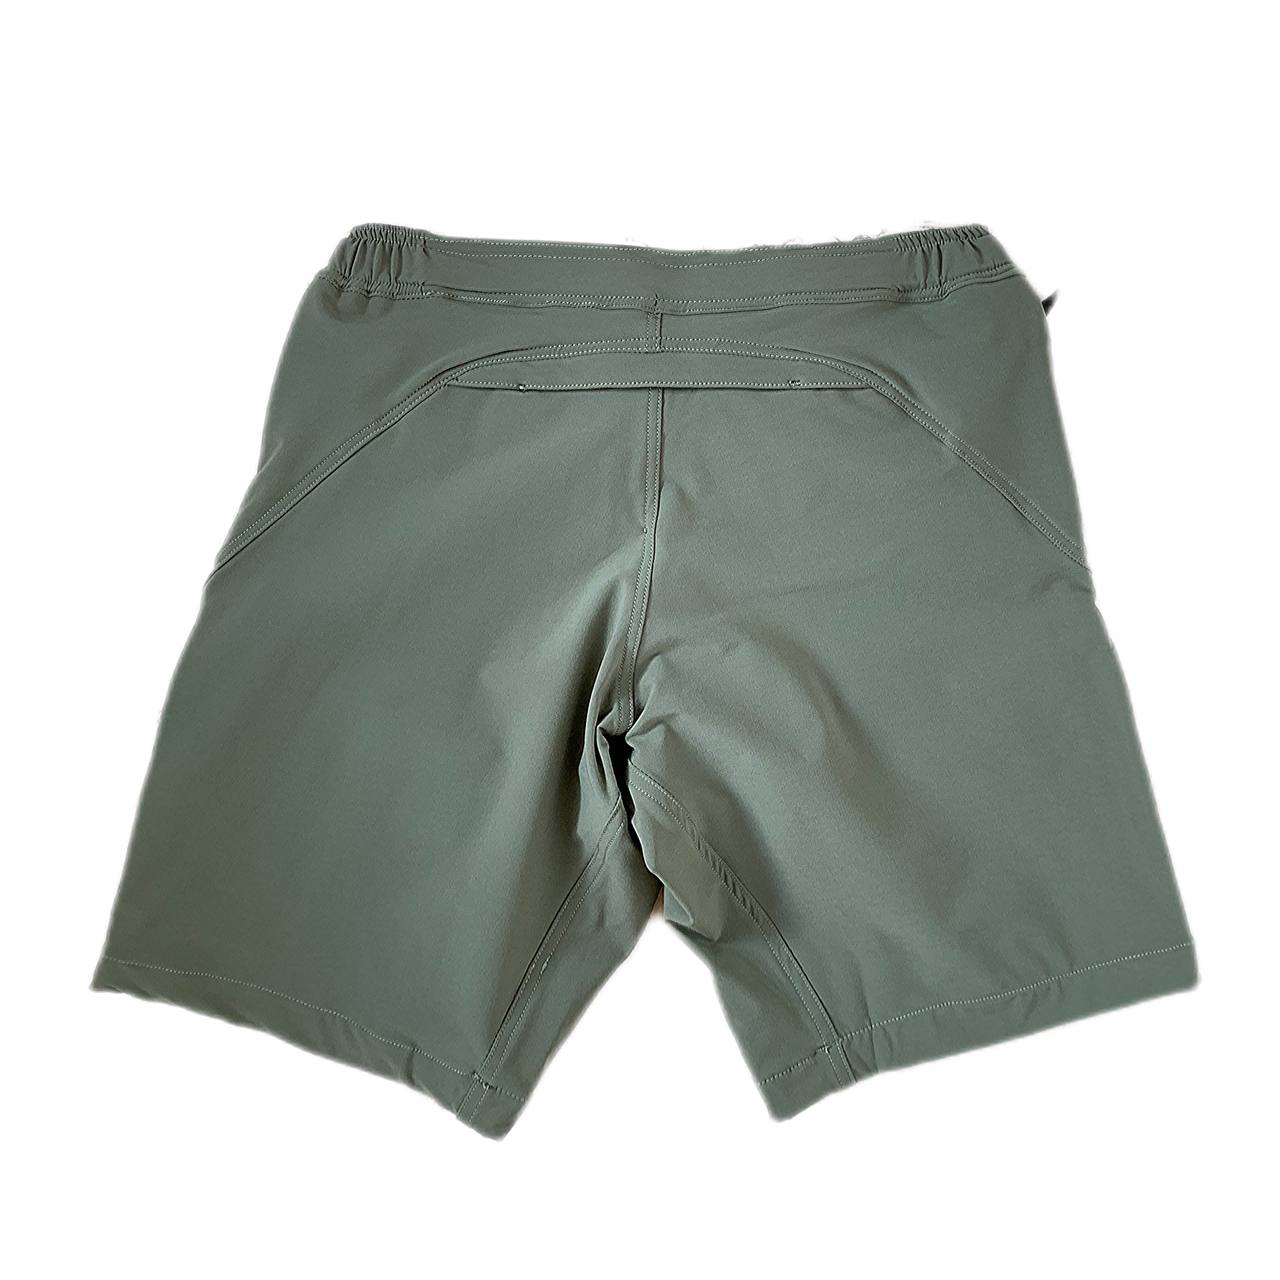 Courier PH Men's 10" City Slicker Shorts